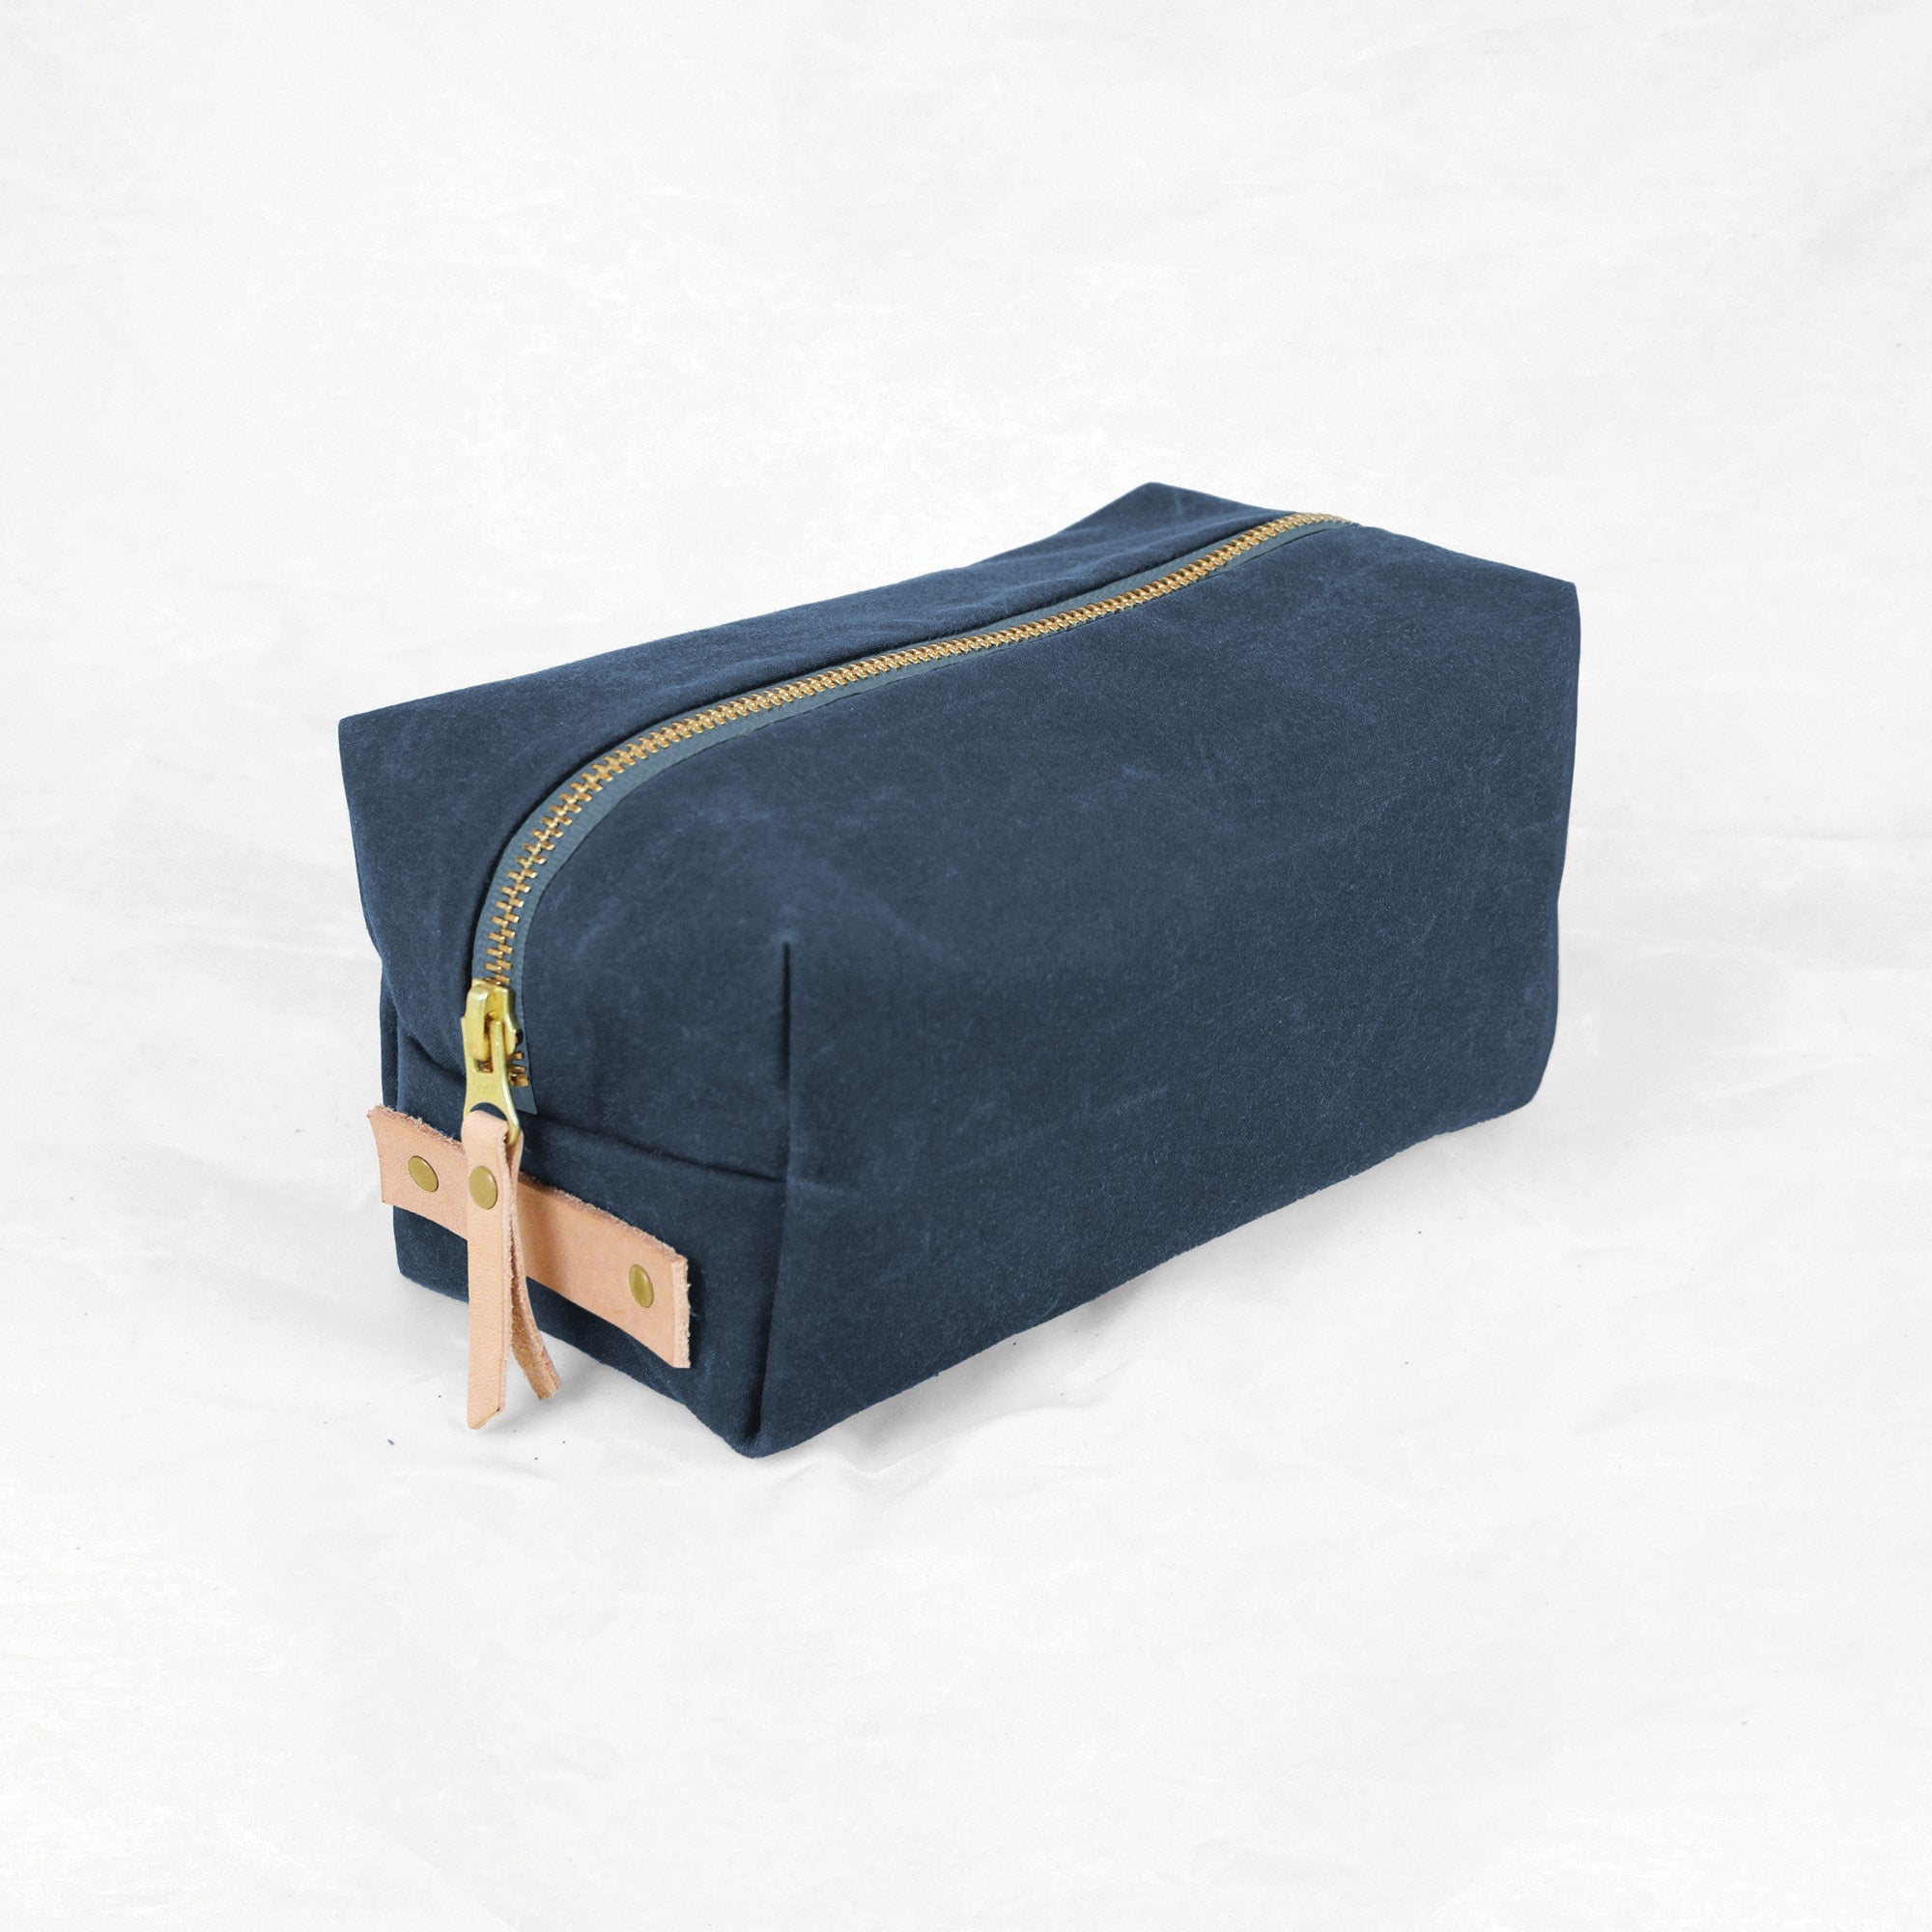 Handbag and Purse Patterns | Studio Kat Designs